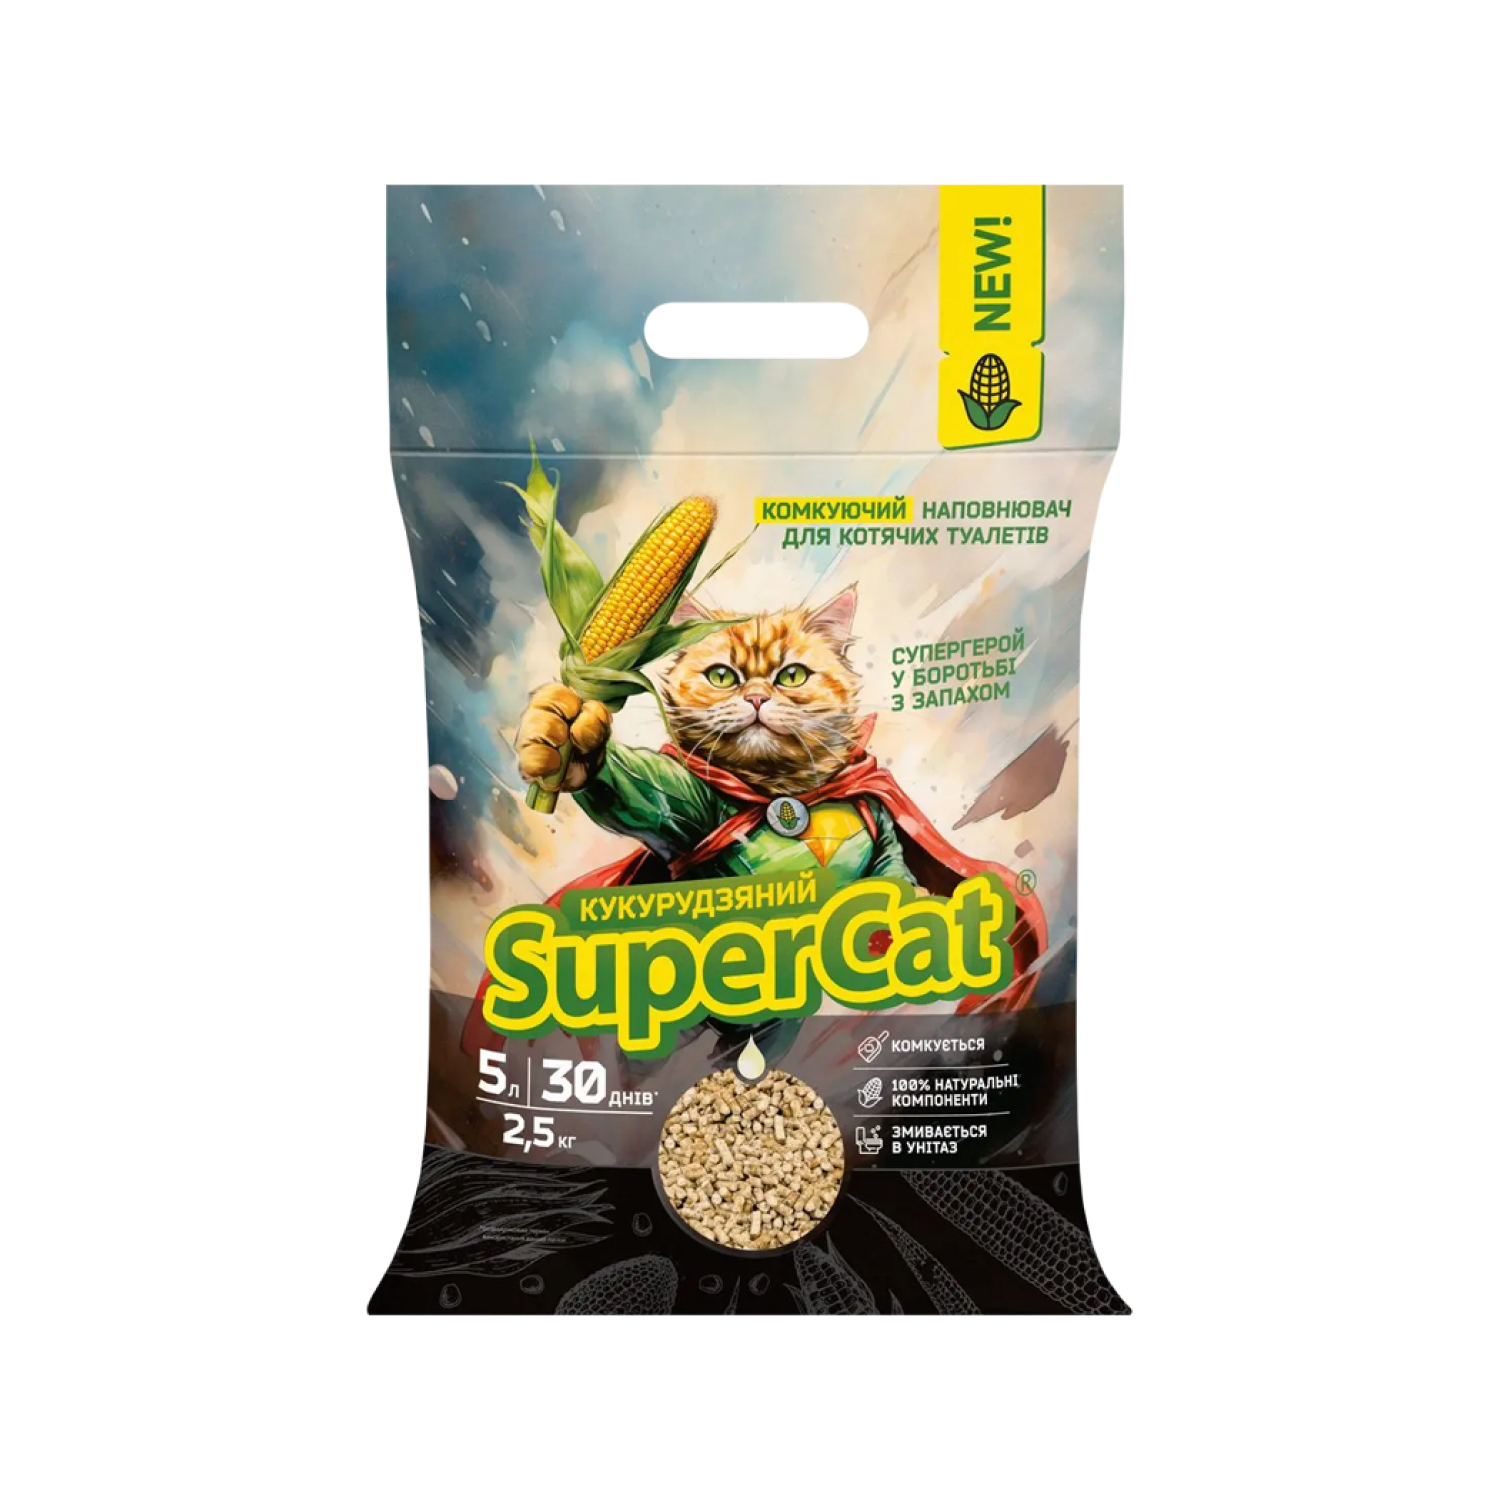 SuperCat Corn-Based Clumping Cat Litter